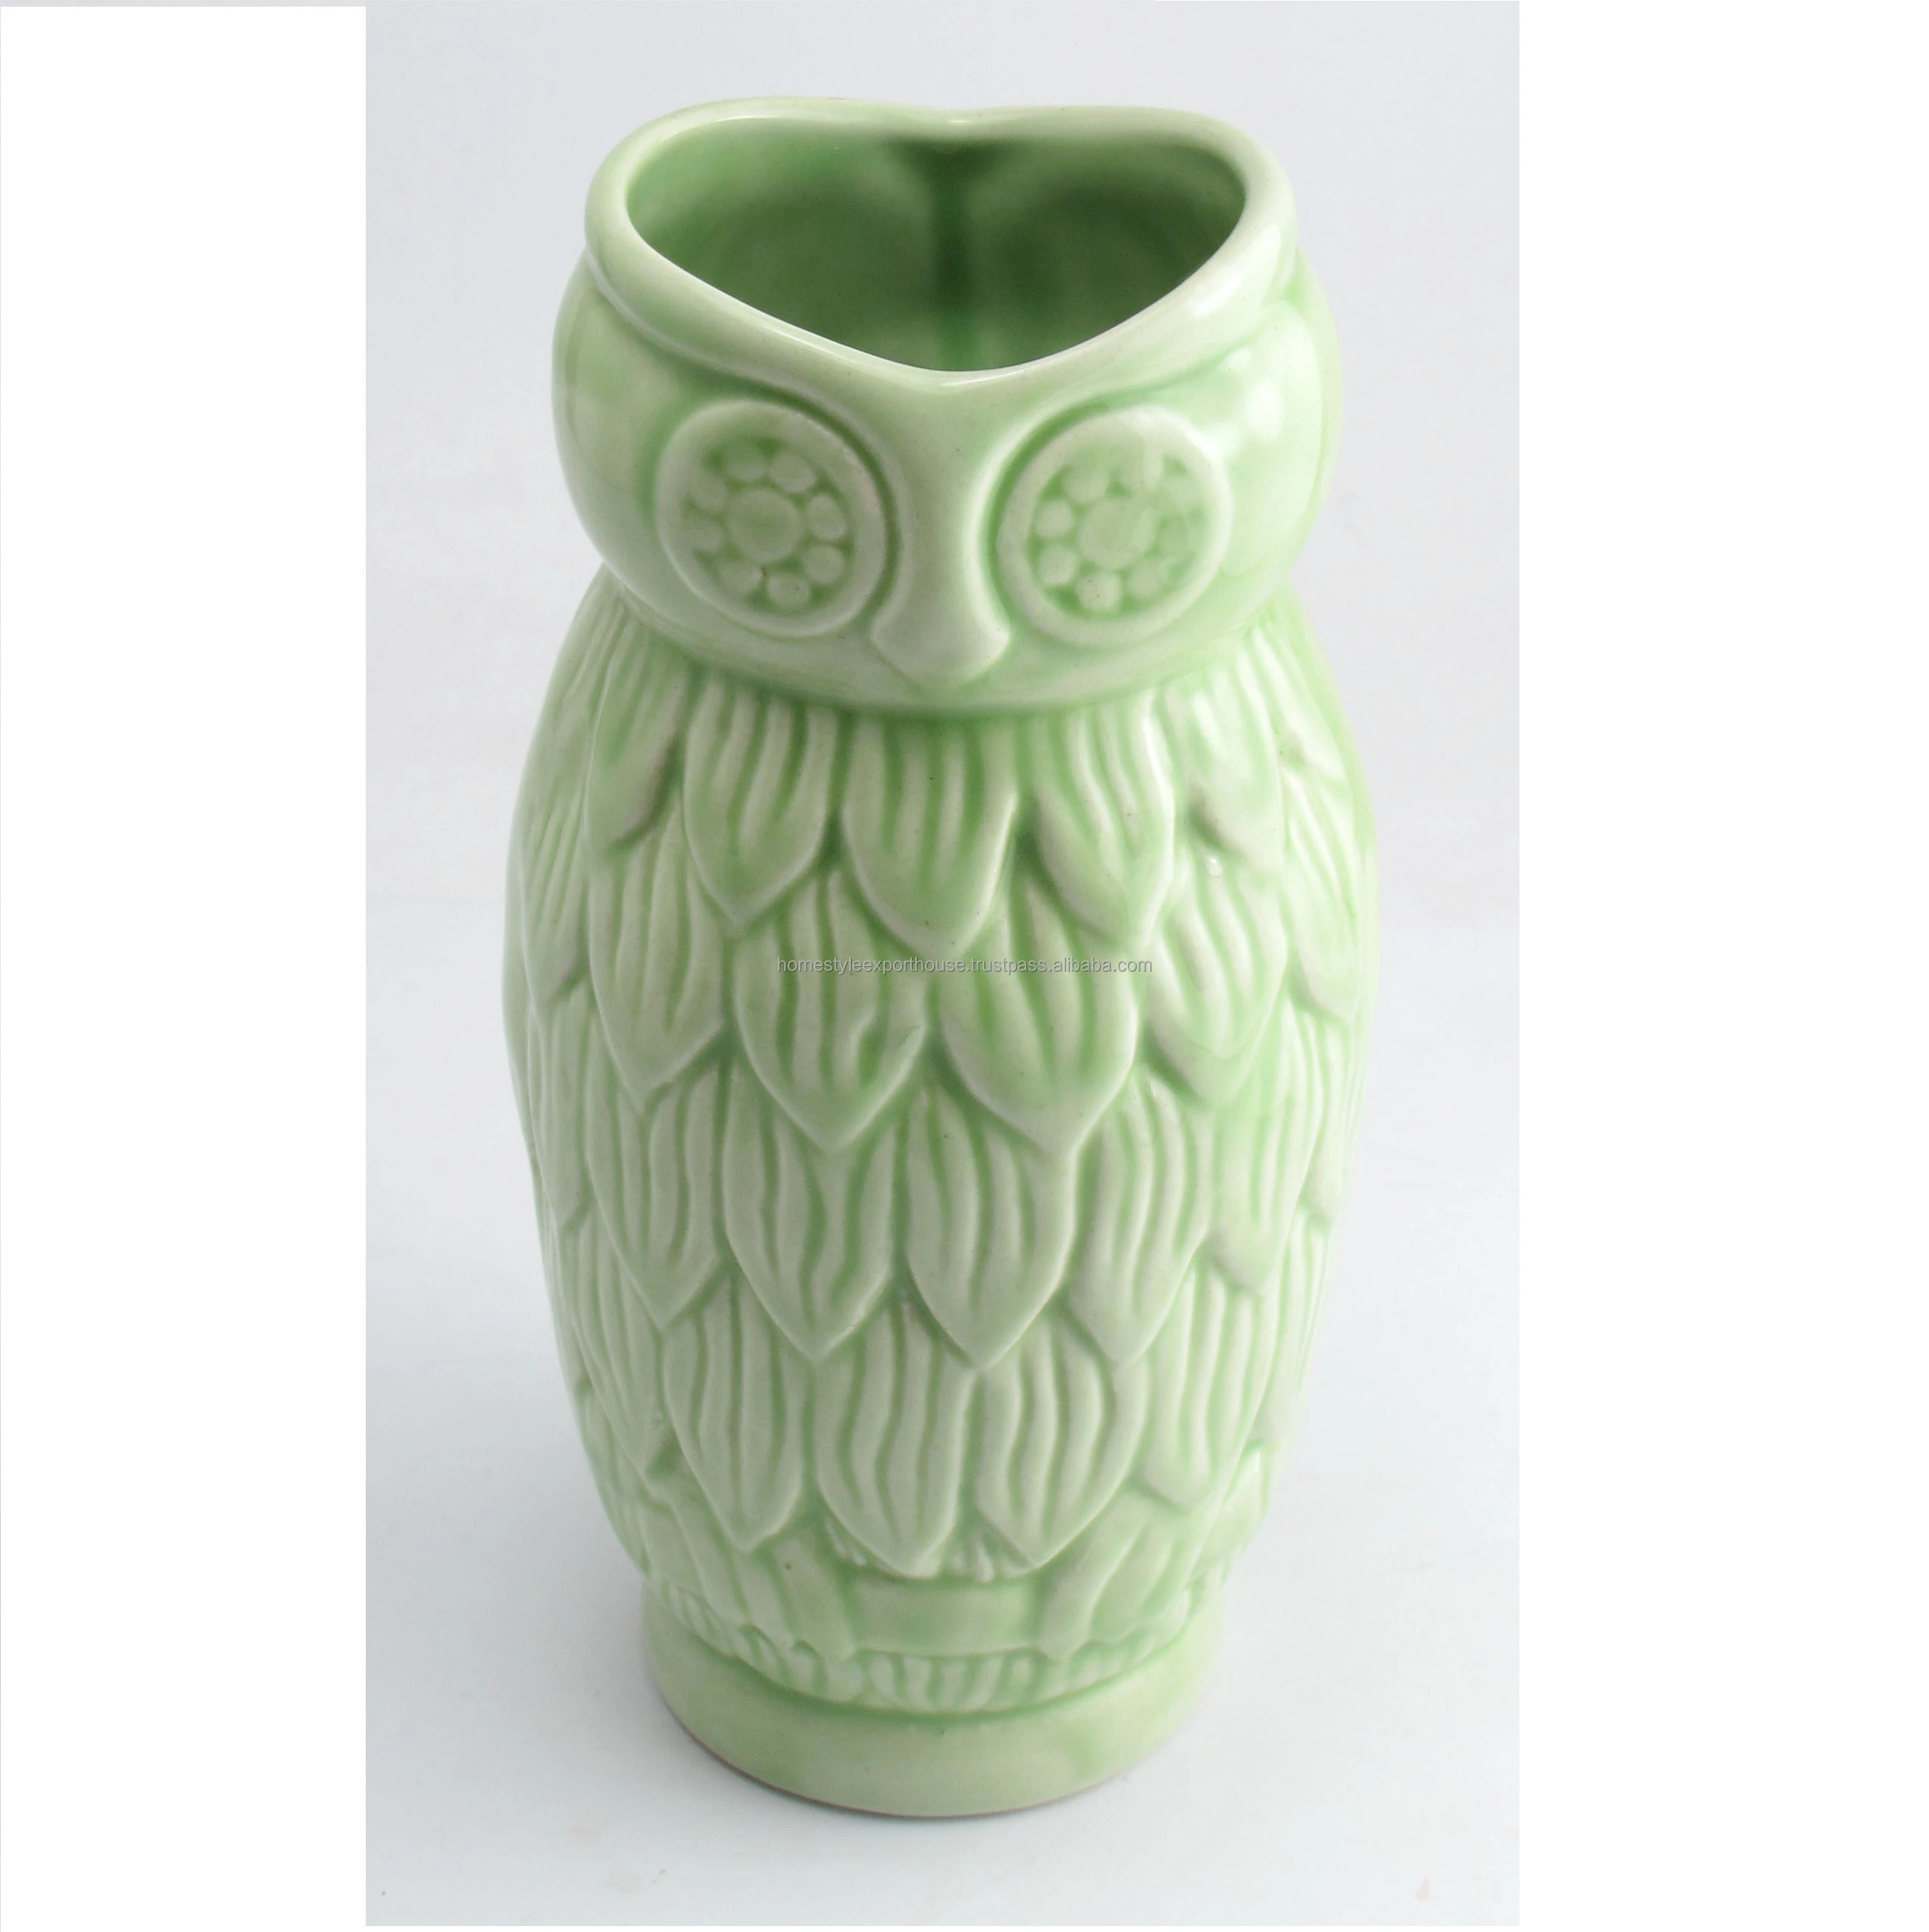 Hand Made Decorative Ceramic Owl Shape Flower Vase Ceramic Garden Pots Wholesale Home Decor Table Top